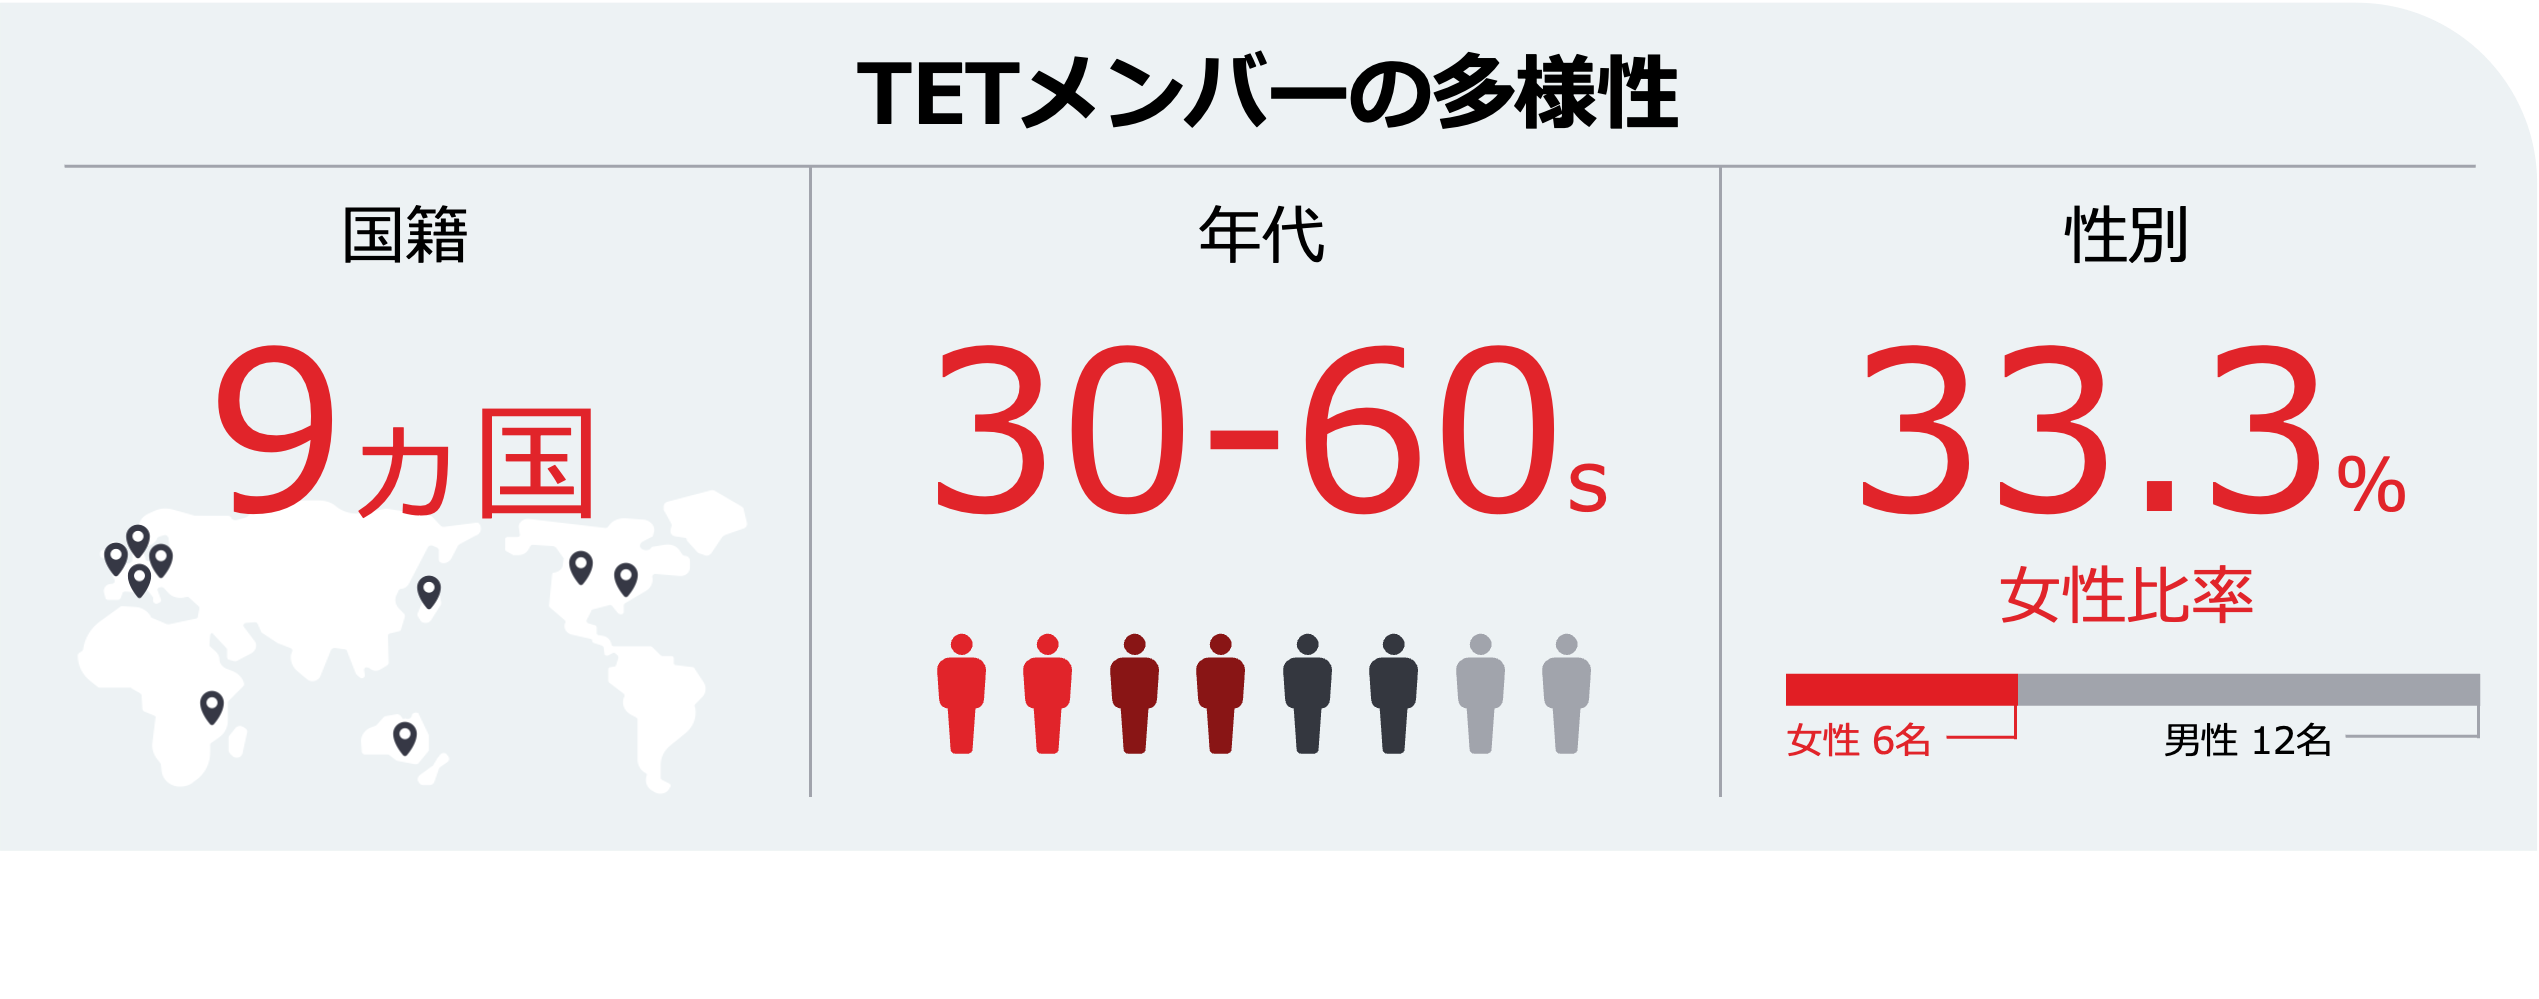 Takeda_Infographics for CG website_19.png